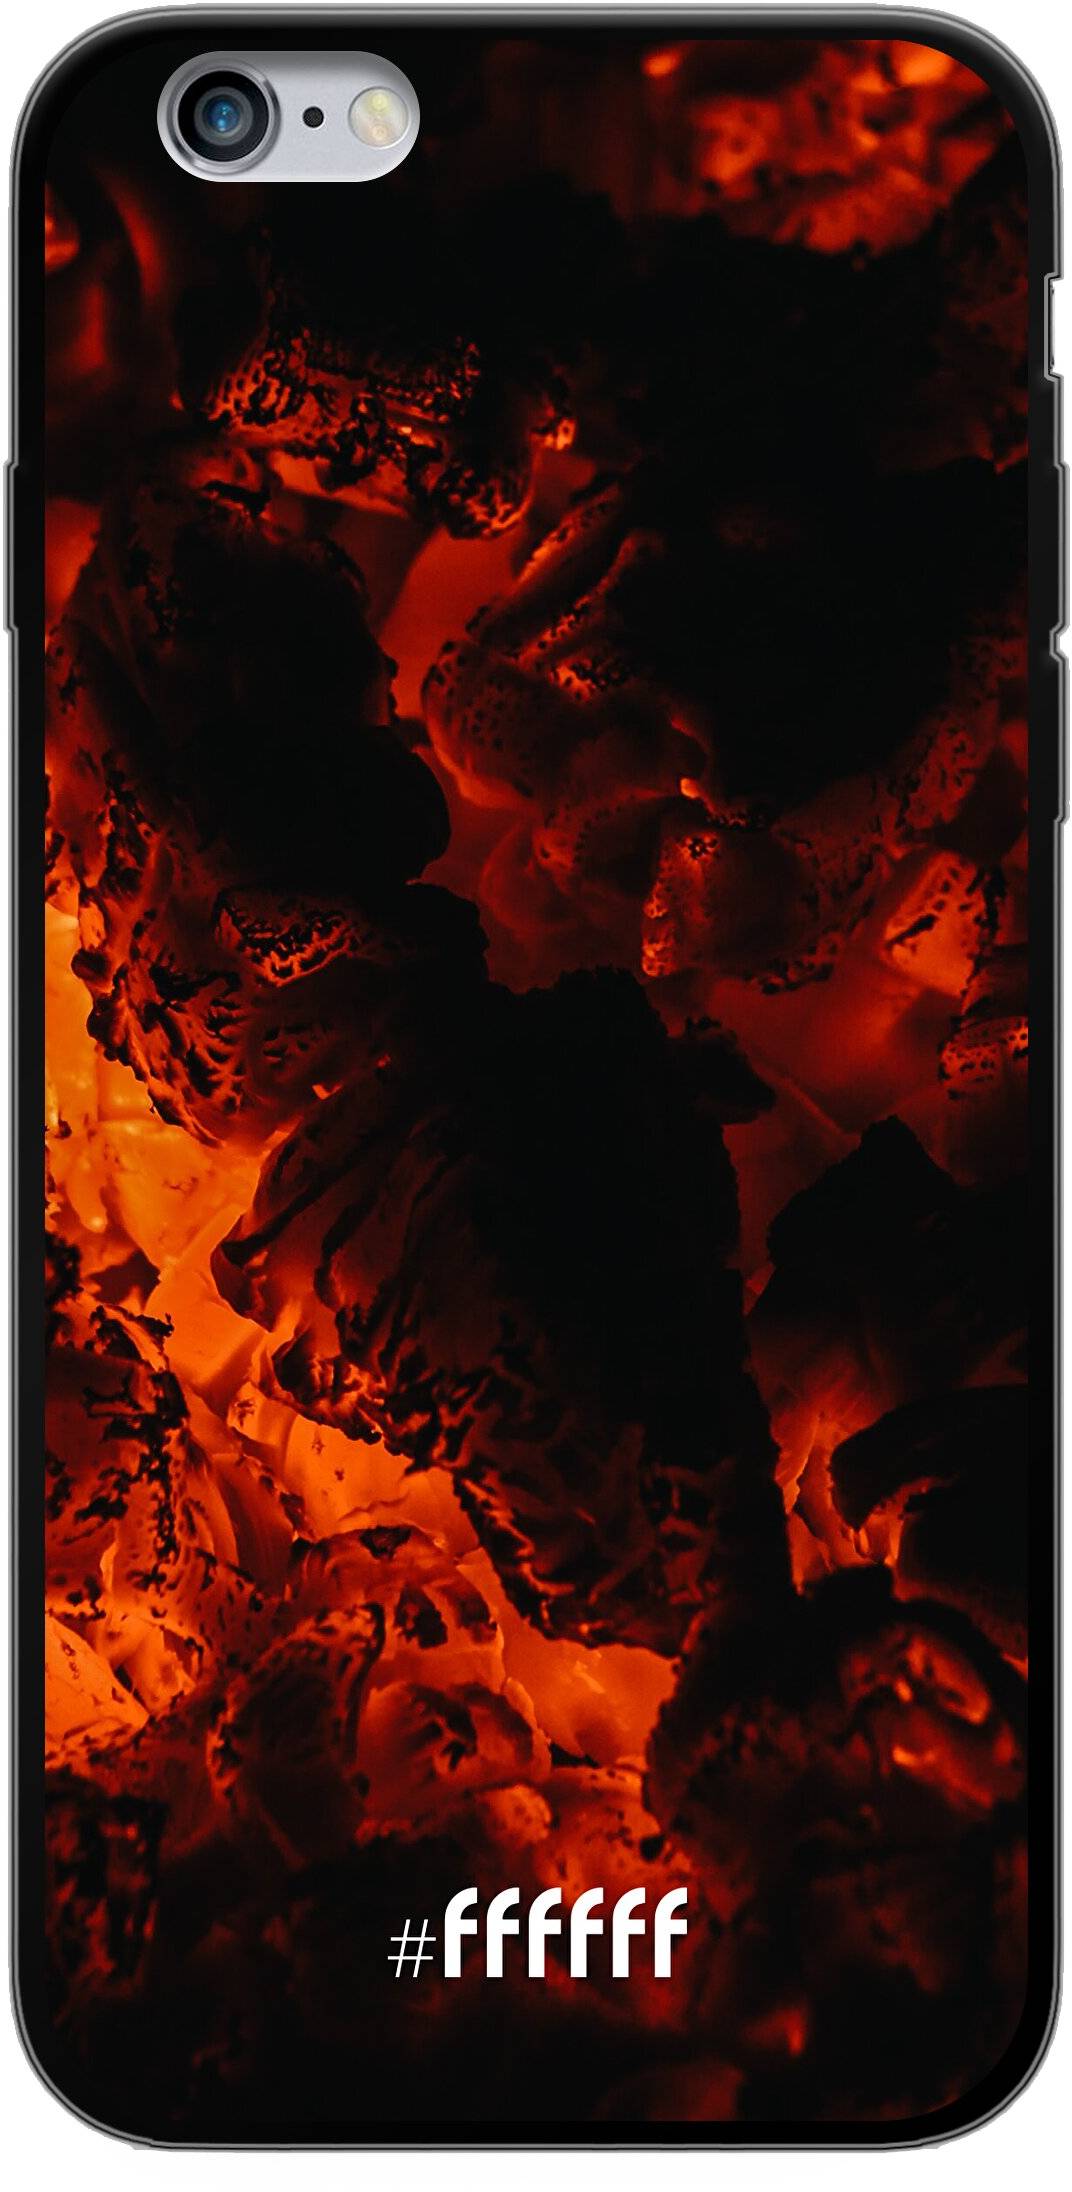 Hot Hot Hot iPhone 6